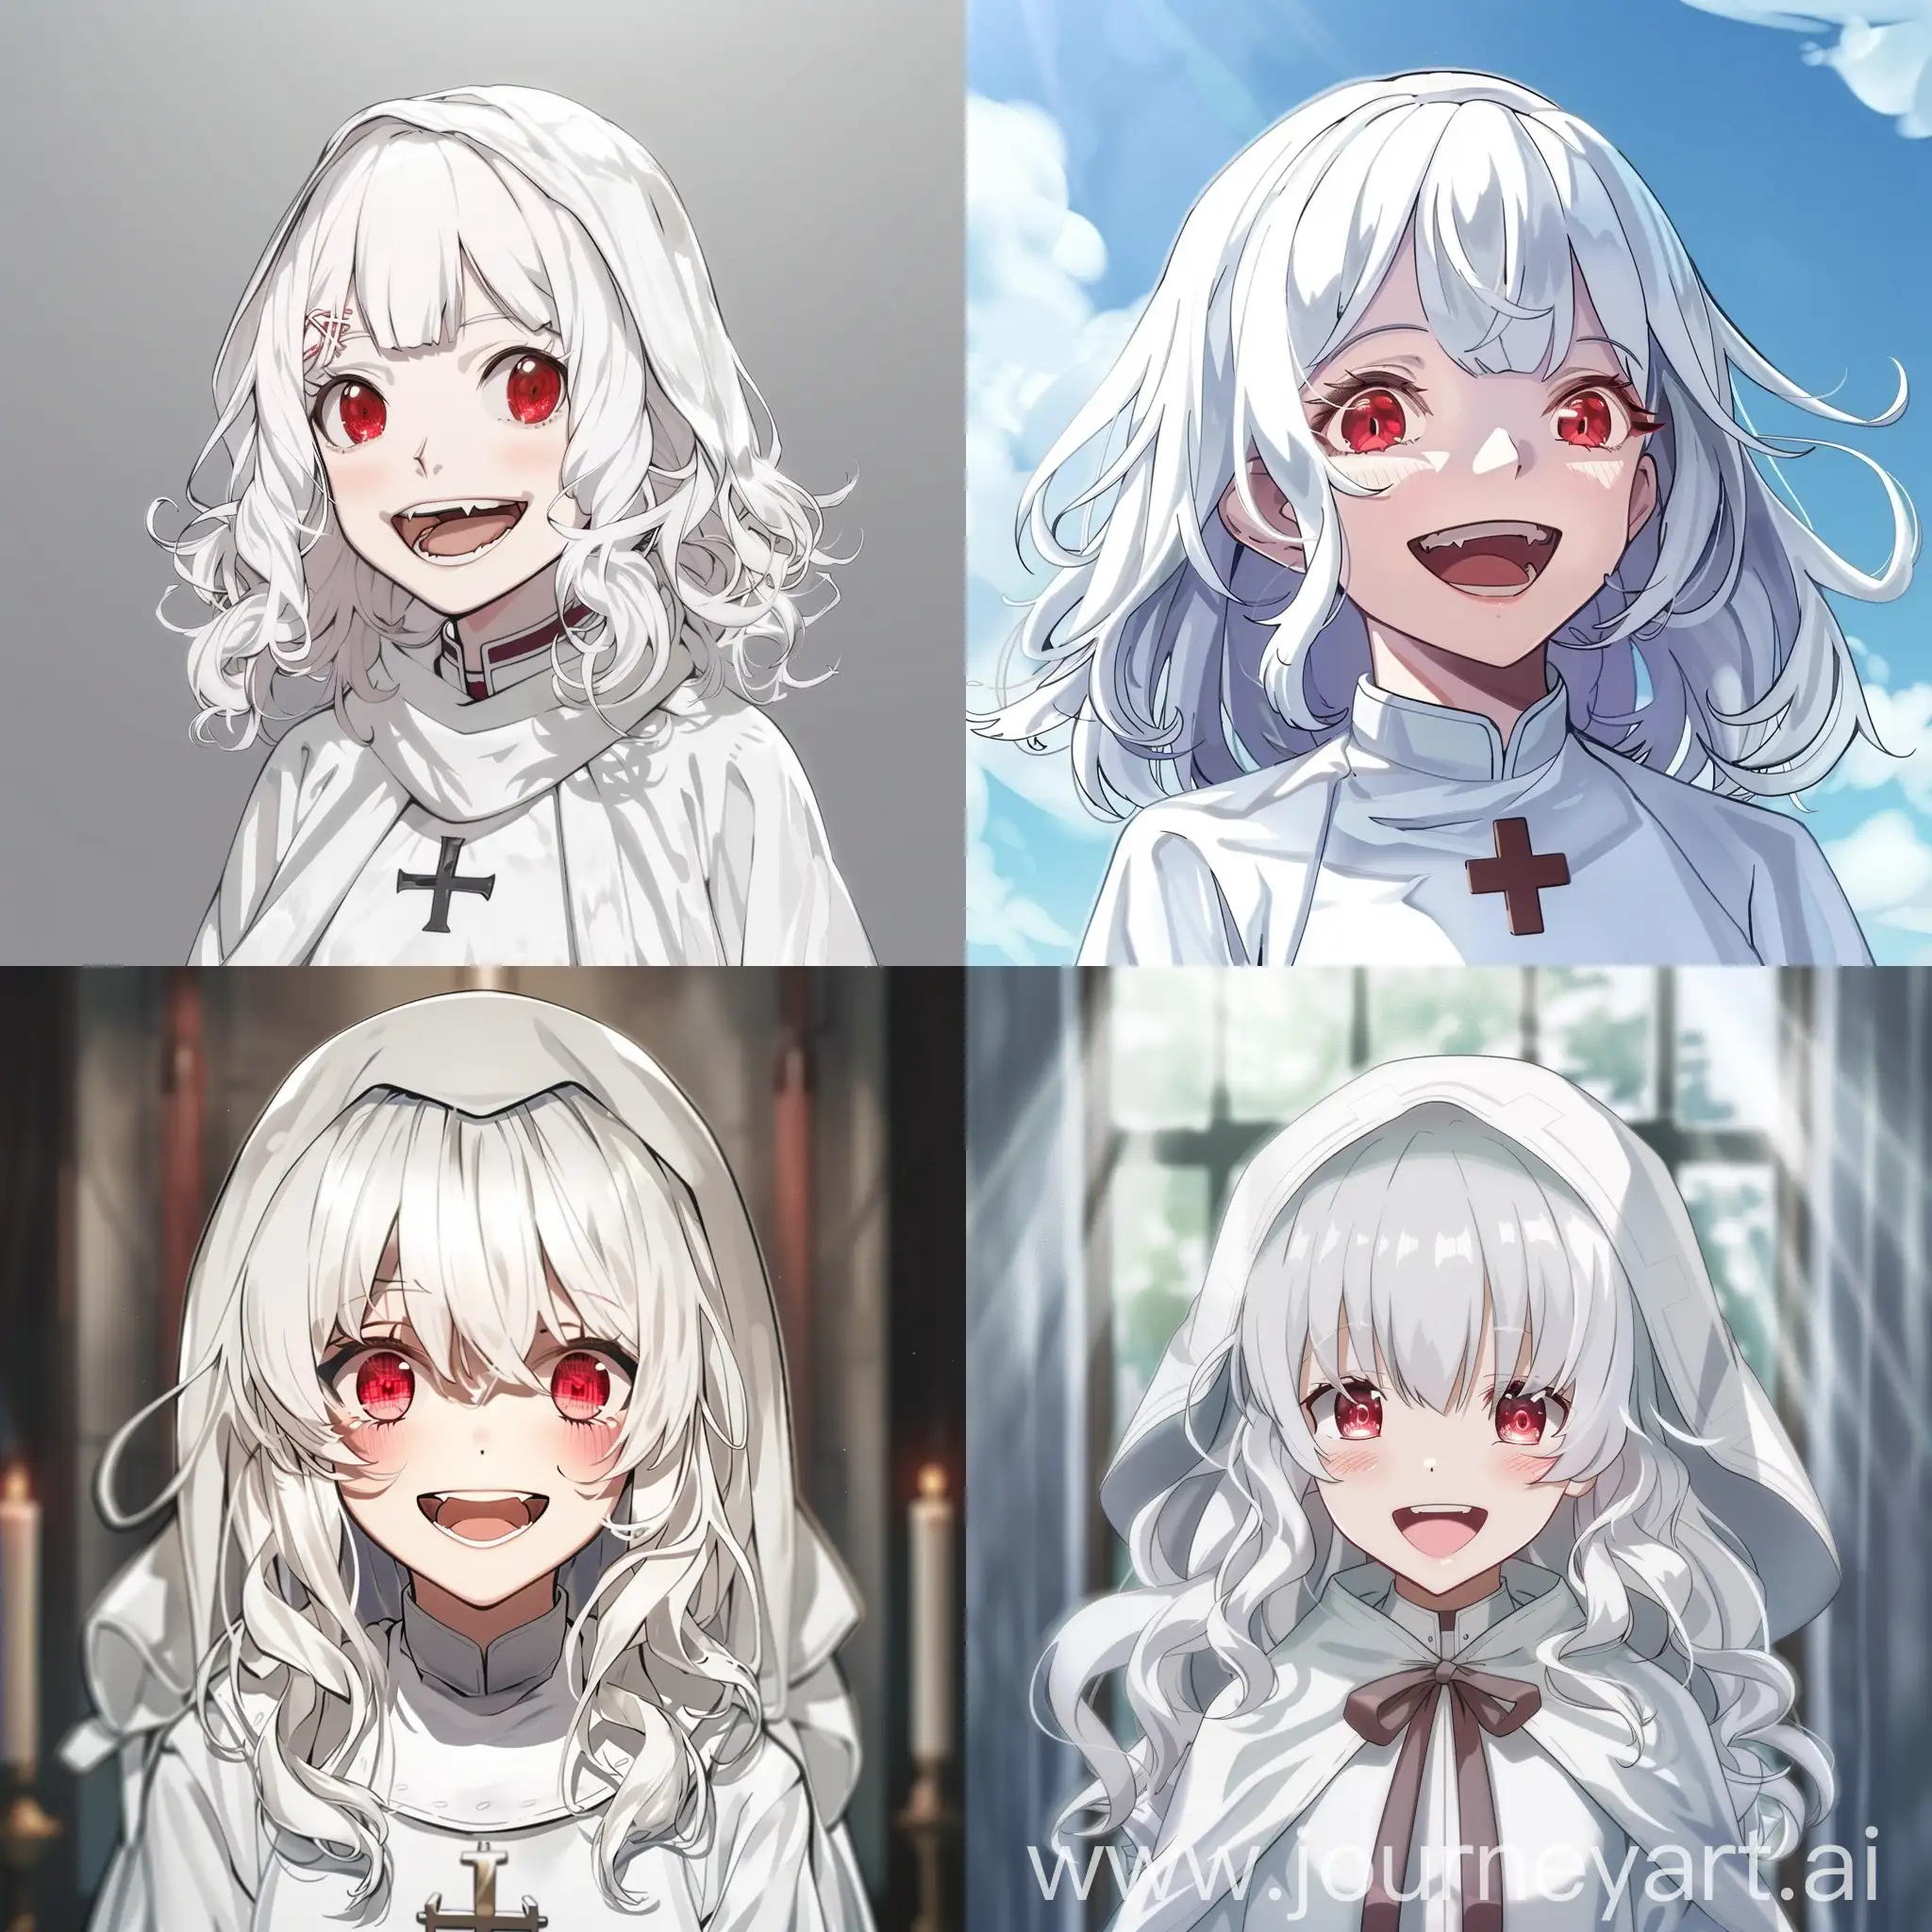 Joyful-Anime-Priestess-with-White-Wavy-Hair-and-Red-Eyes